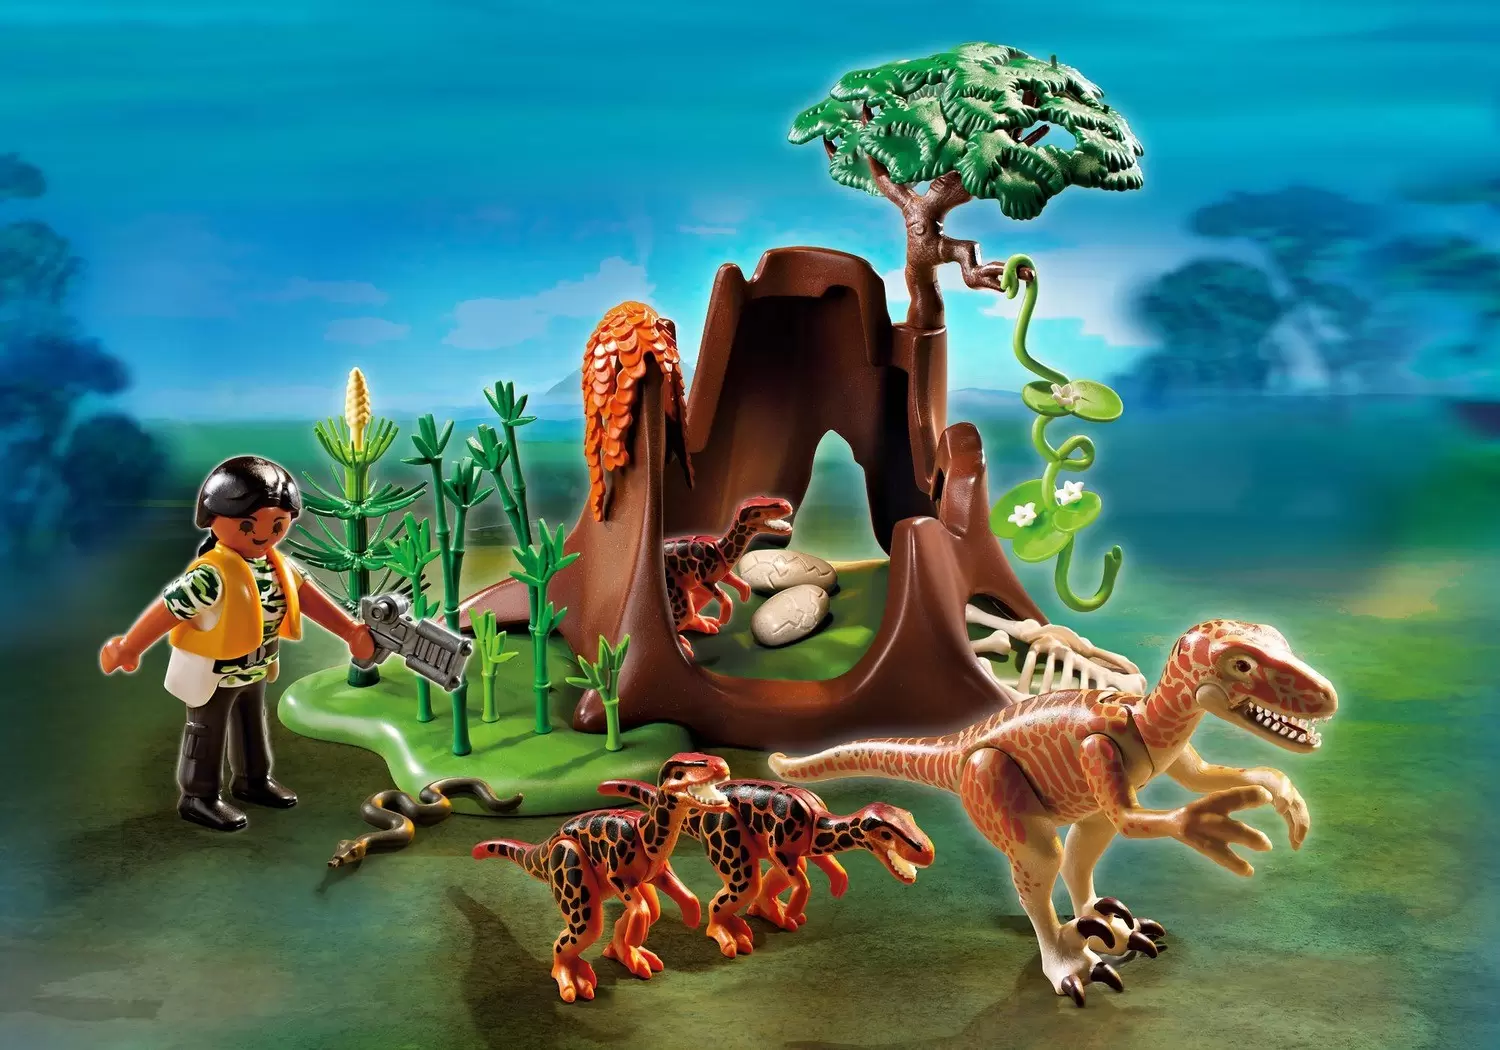 Deinonychus et Vélociraptors - Playmobil Dinosaures 5233